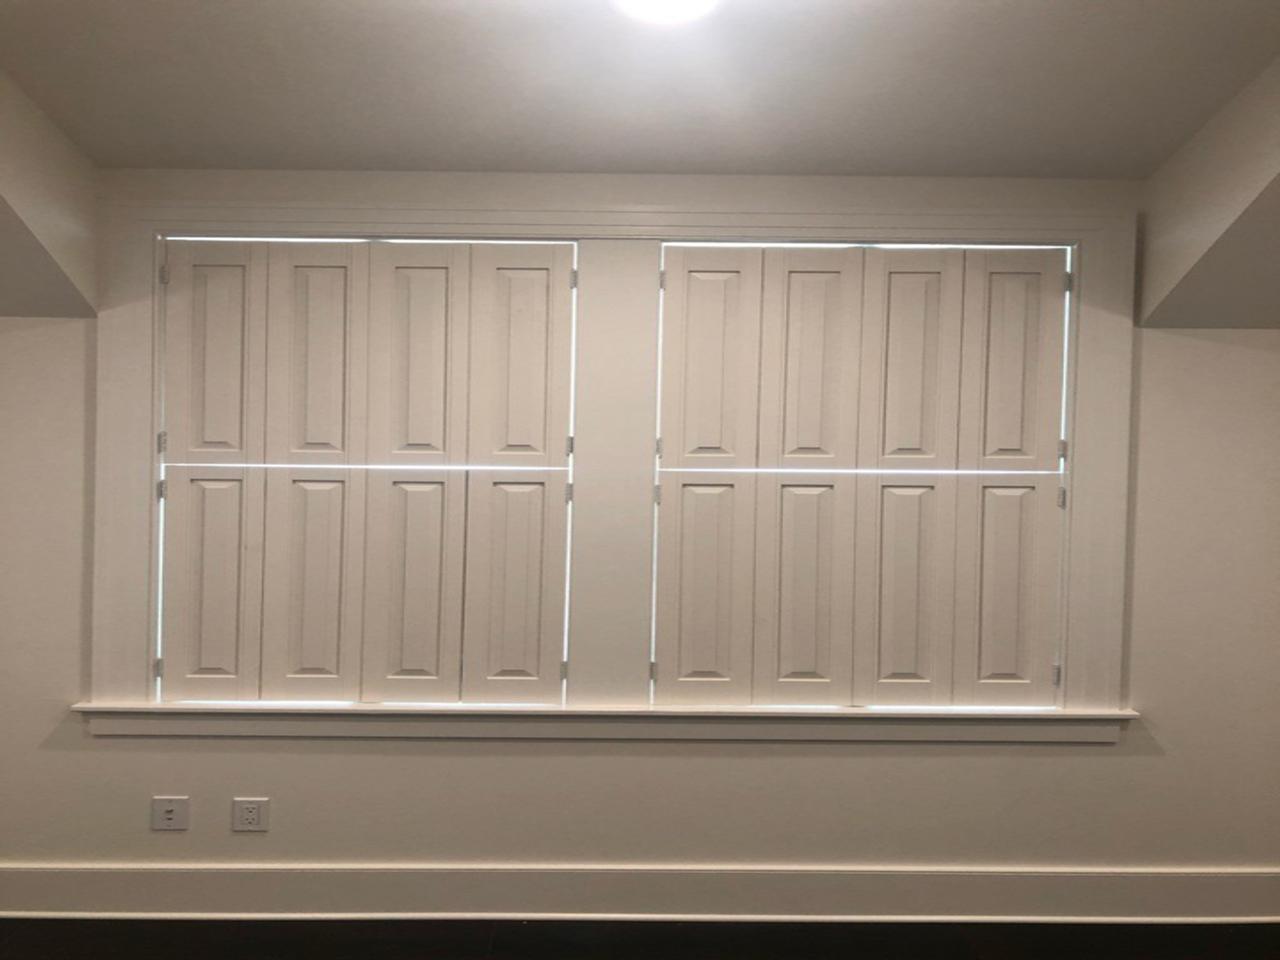 Raised panel shutters on a double window